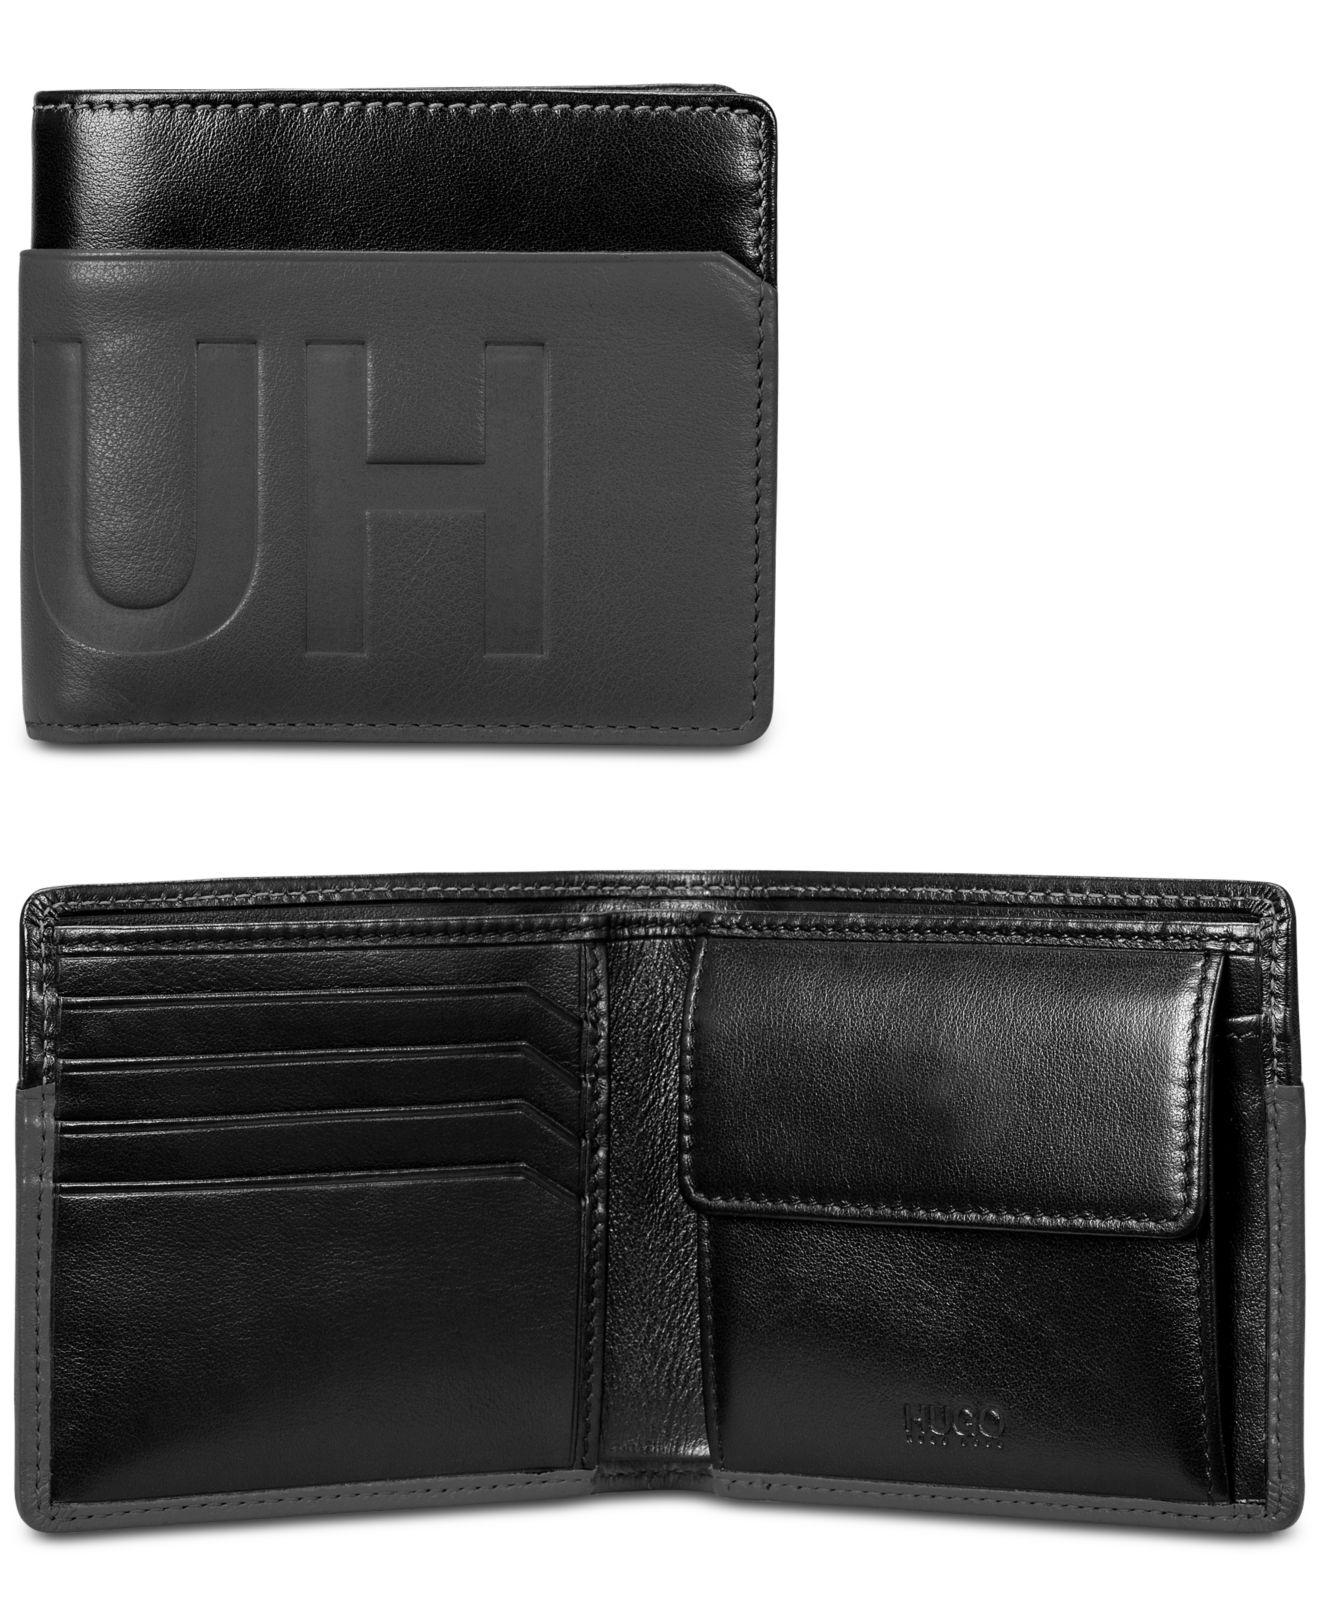 hugo boss mens wallet with coin pocket